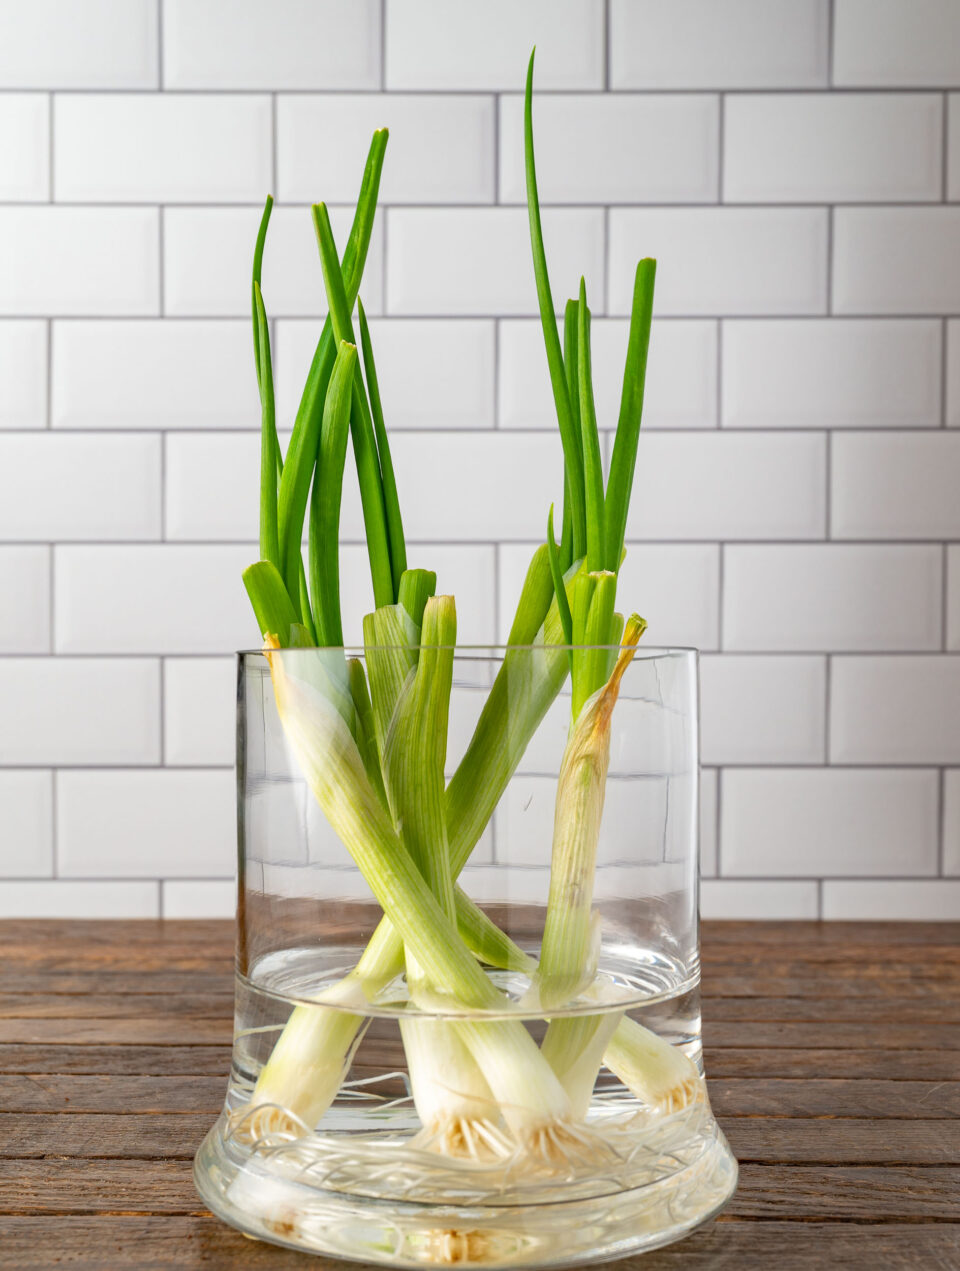 grown green onions in vase